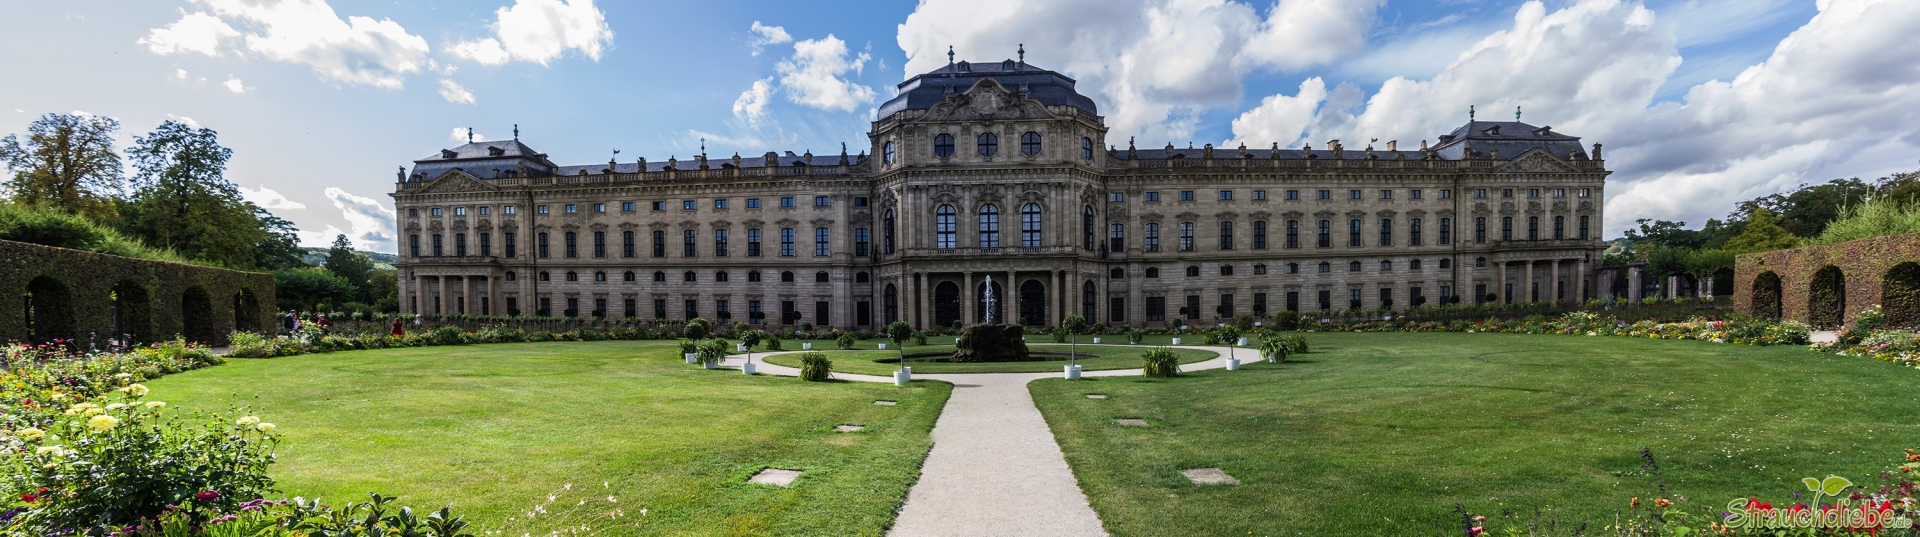 Würzburger Residenz